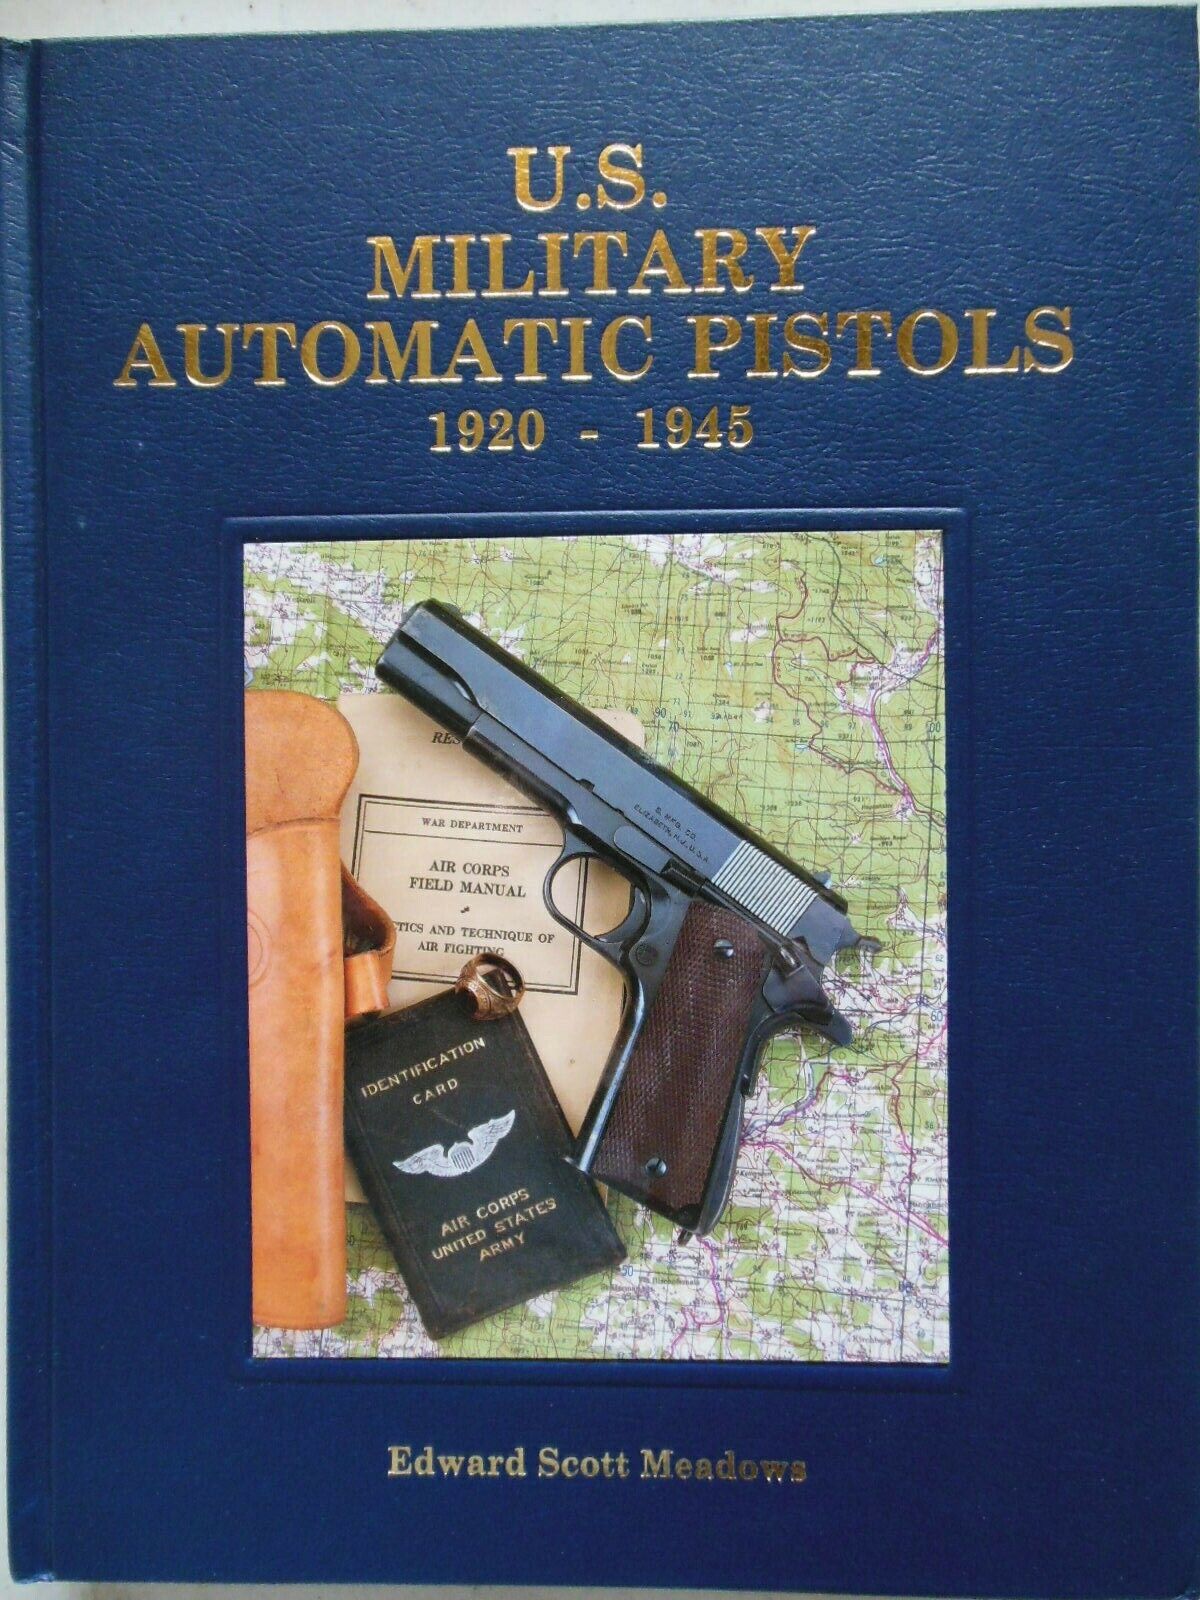 U.S. Military Automatic Pistols Vol 2 1920-1945  gun book WW2 Handgun 